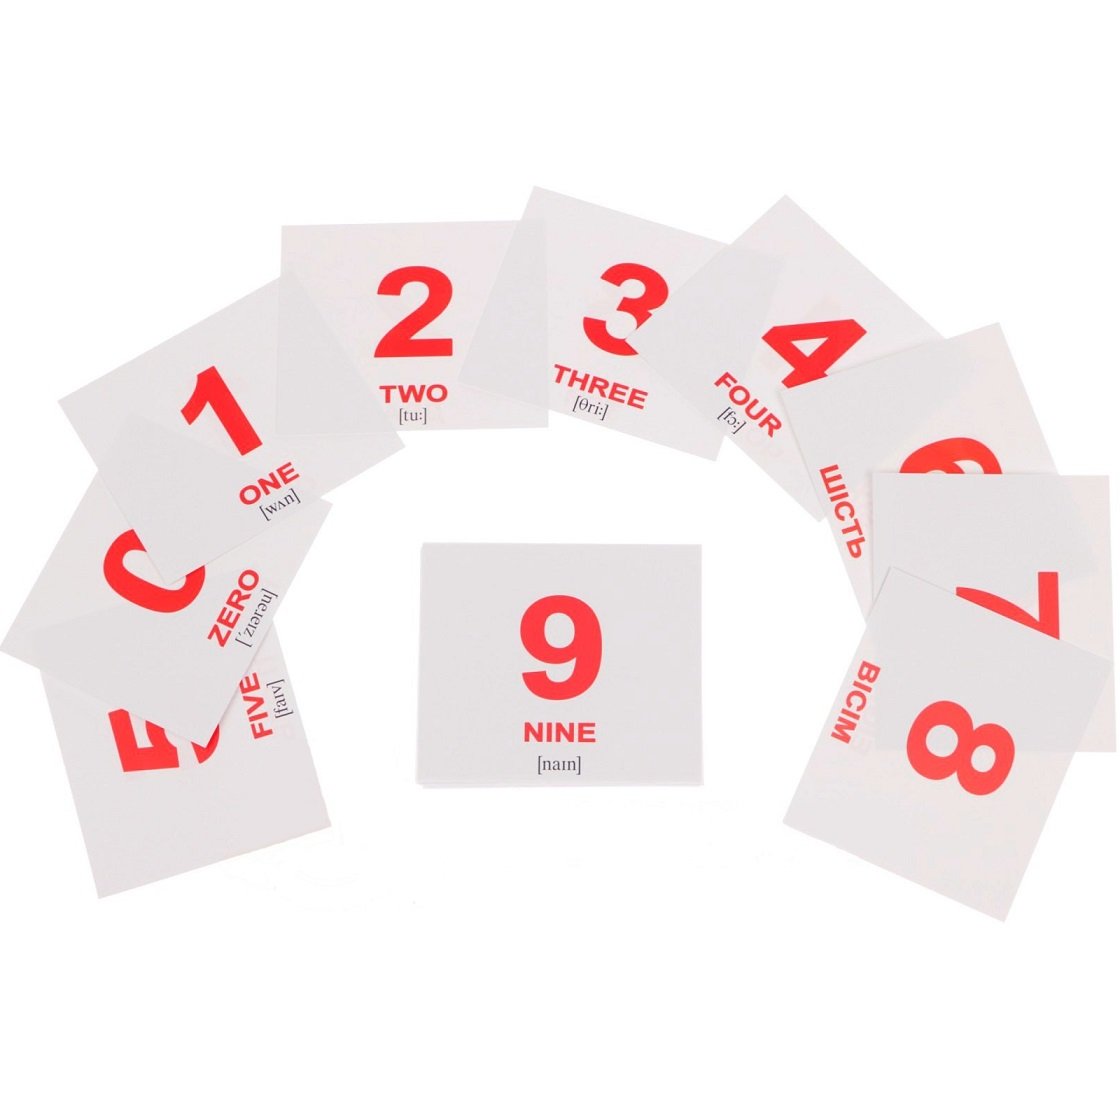 Набор карточек Вундеркинд с пеленок Числа/Numbers, укр.-англ. язык, 40 шт. - фото 1